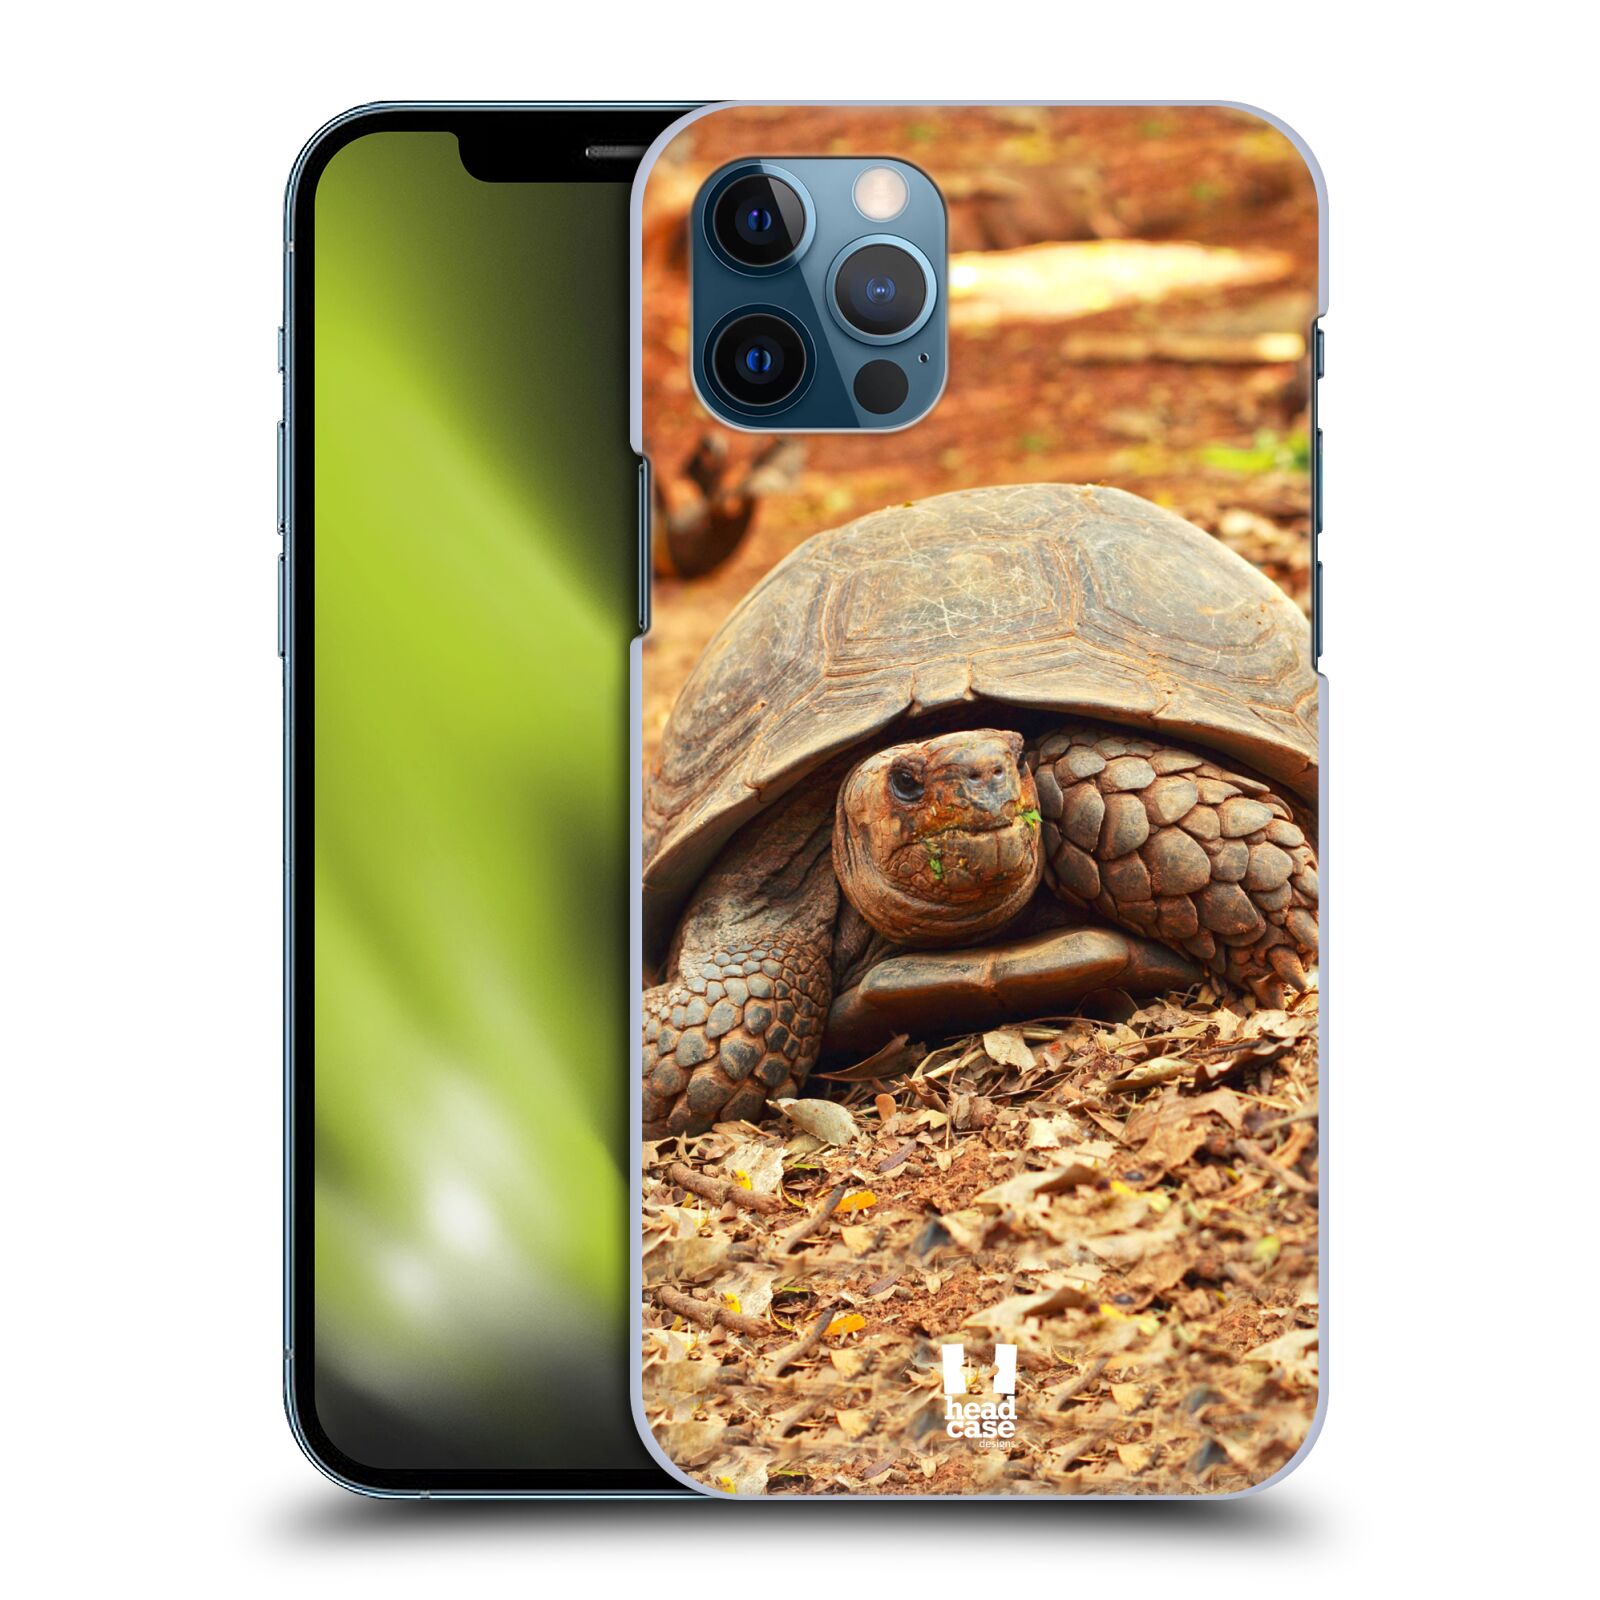 HEAD CASE plastový obal na mobil Apple Iphone 12 / Iphone 12 PRO vzor slavná zvířata foto želva